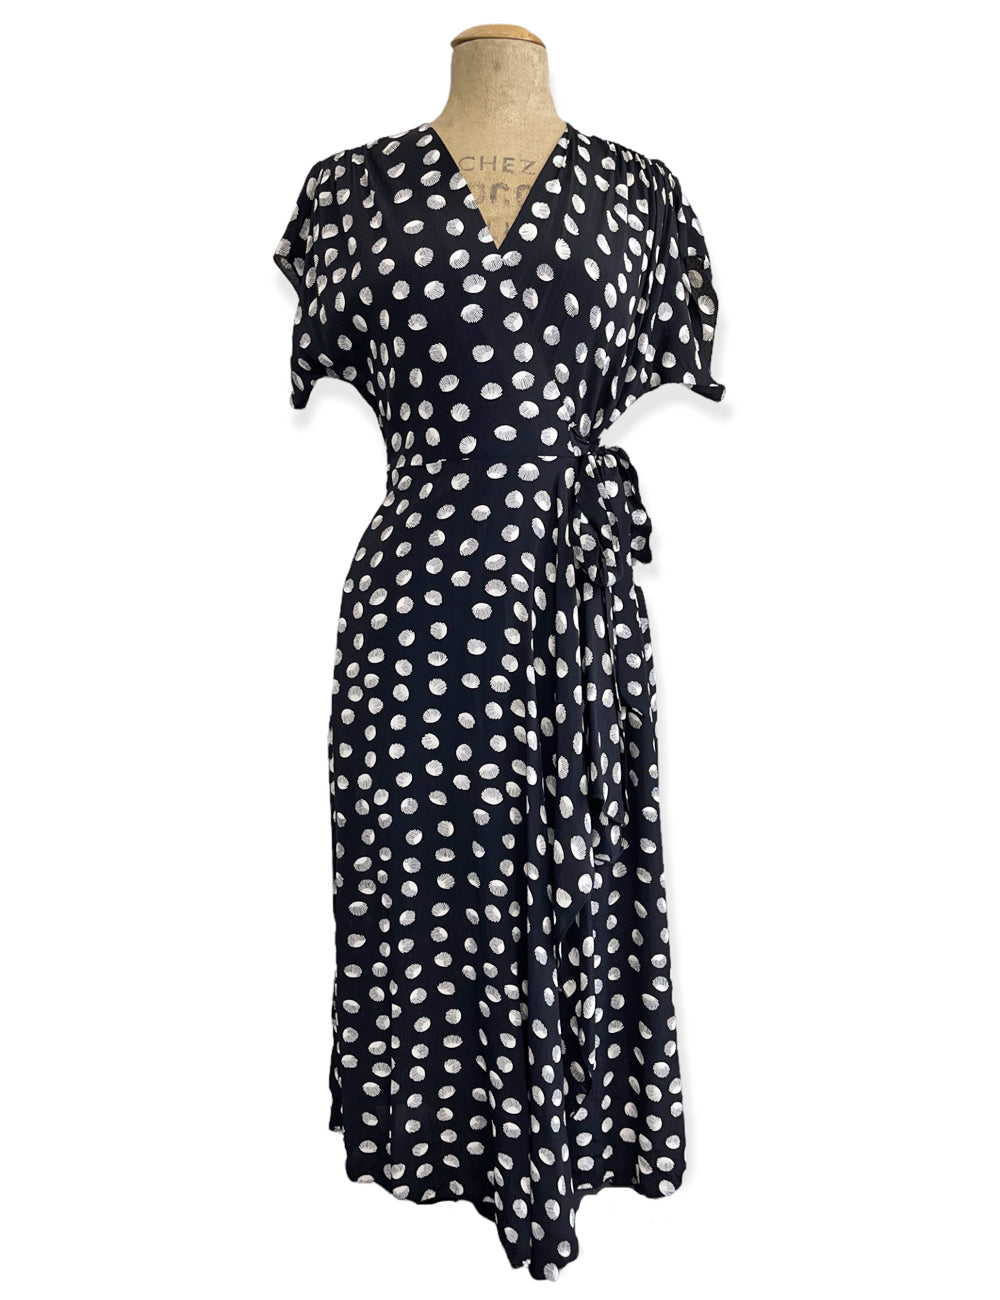 Black & White Seashell Dot 1940s Style Cascade Wrap Dress